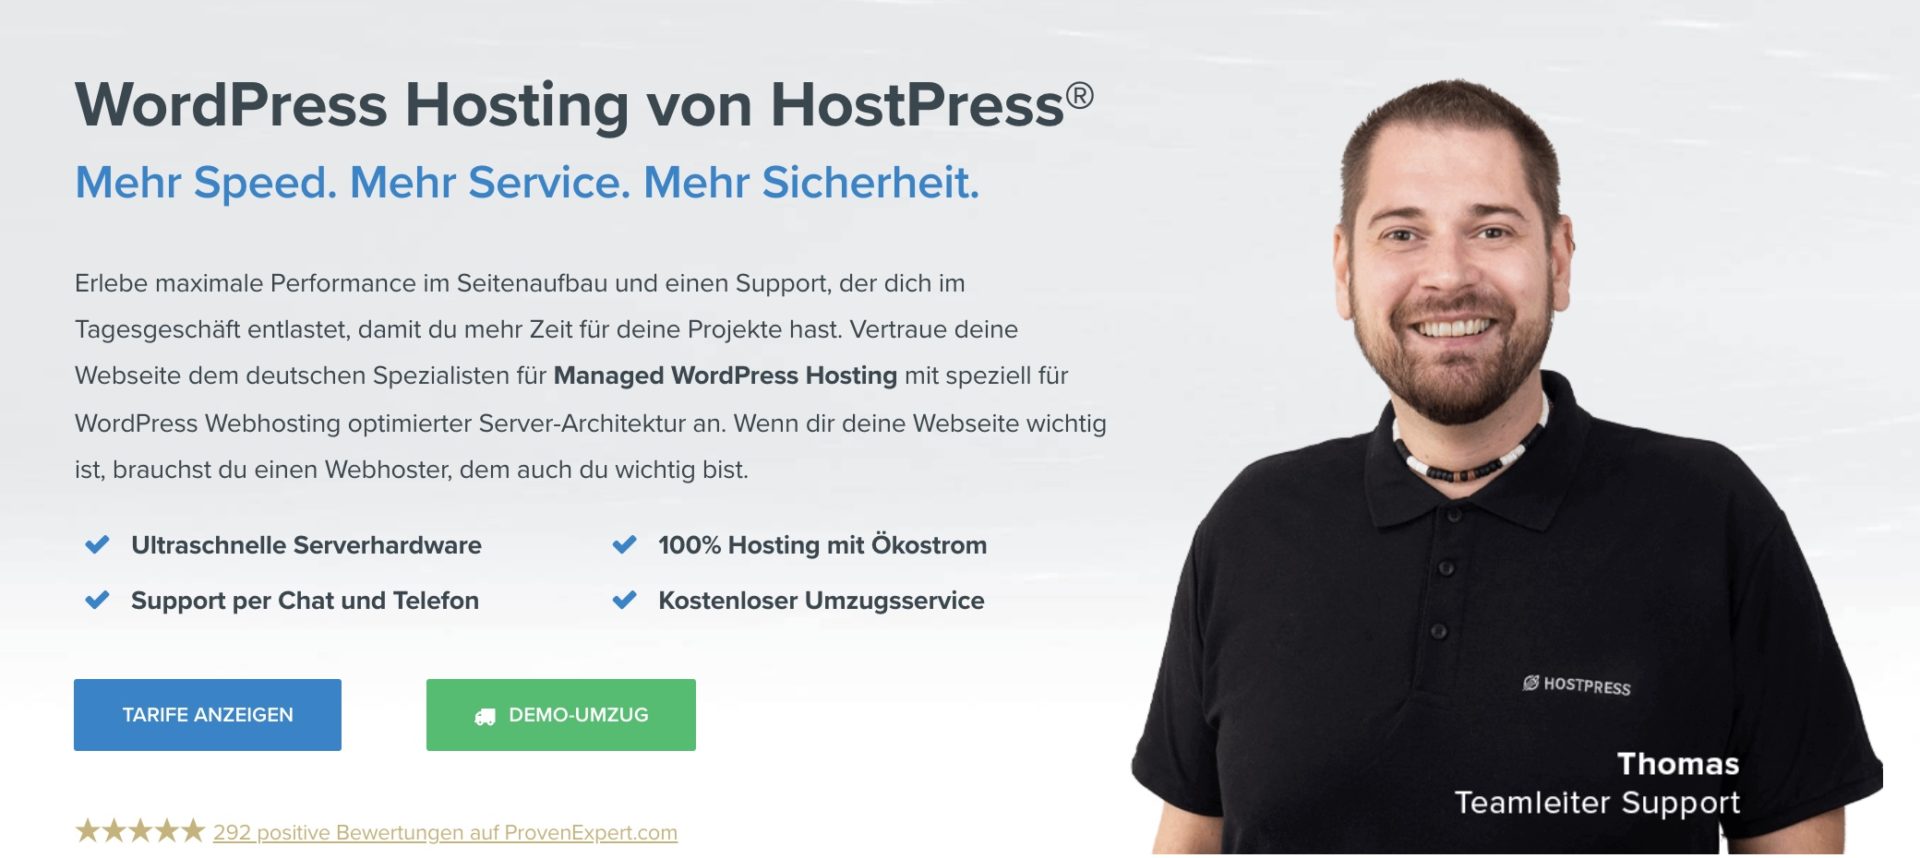 HostPress GmbH